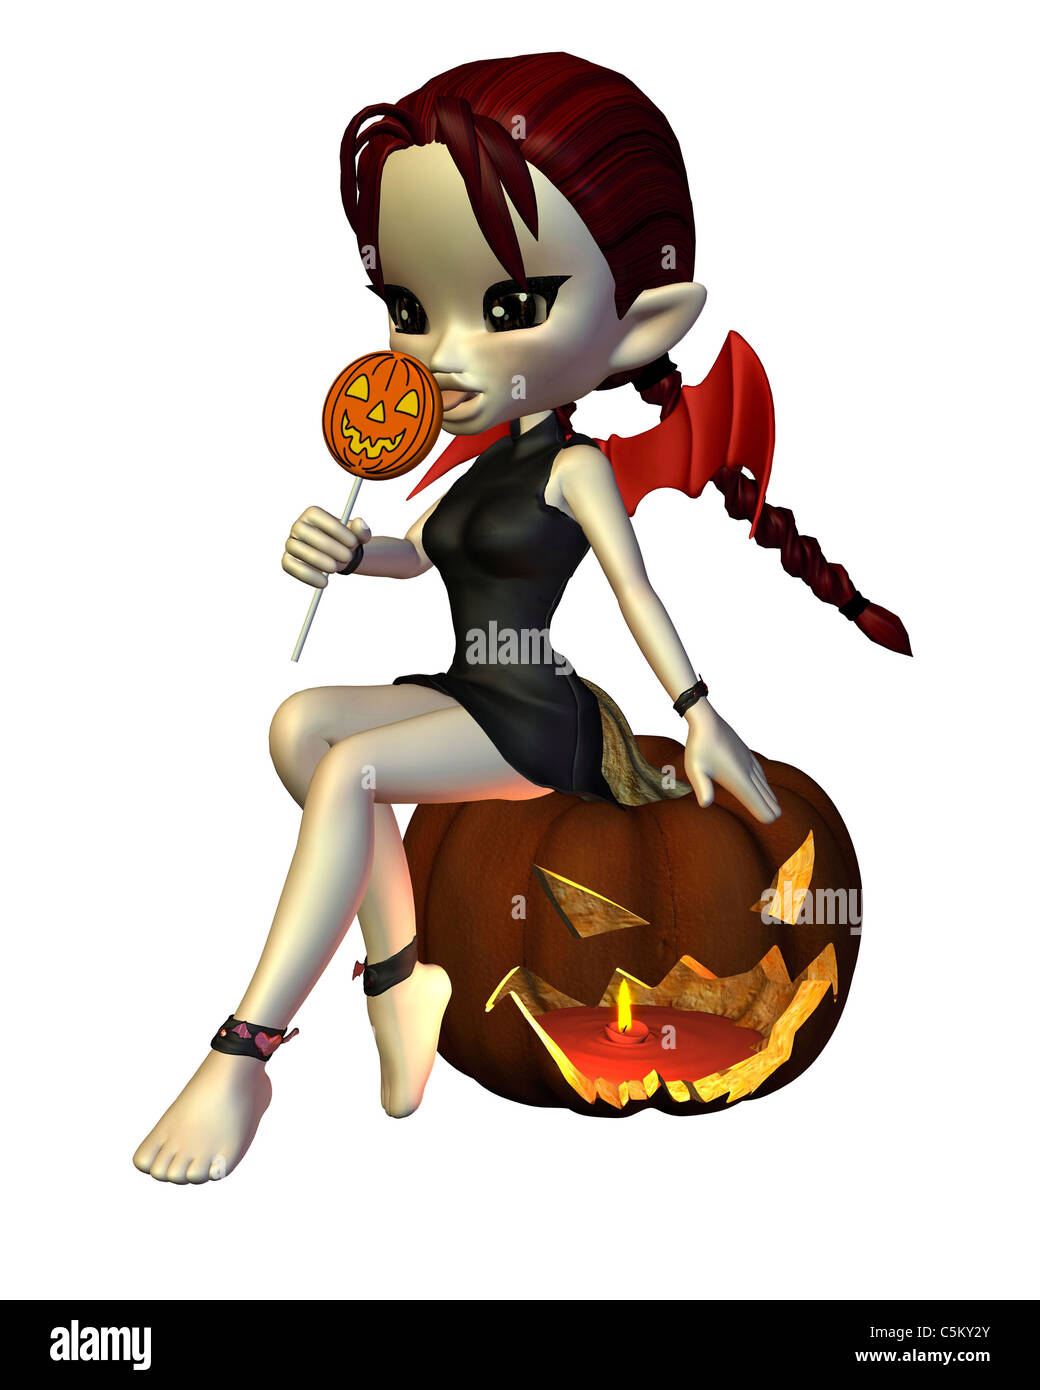 Cute Toon Halloween Devil with Lollipop and Pumpkin Stock Photo